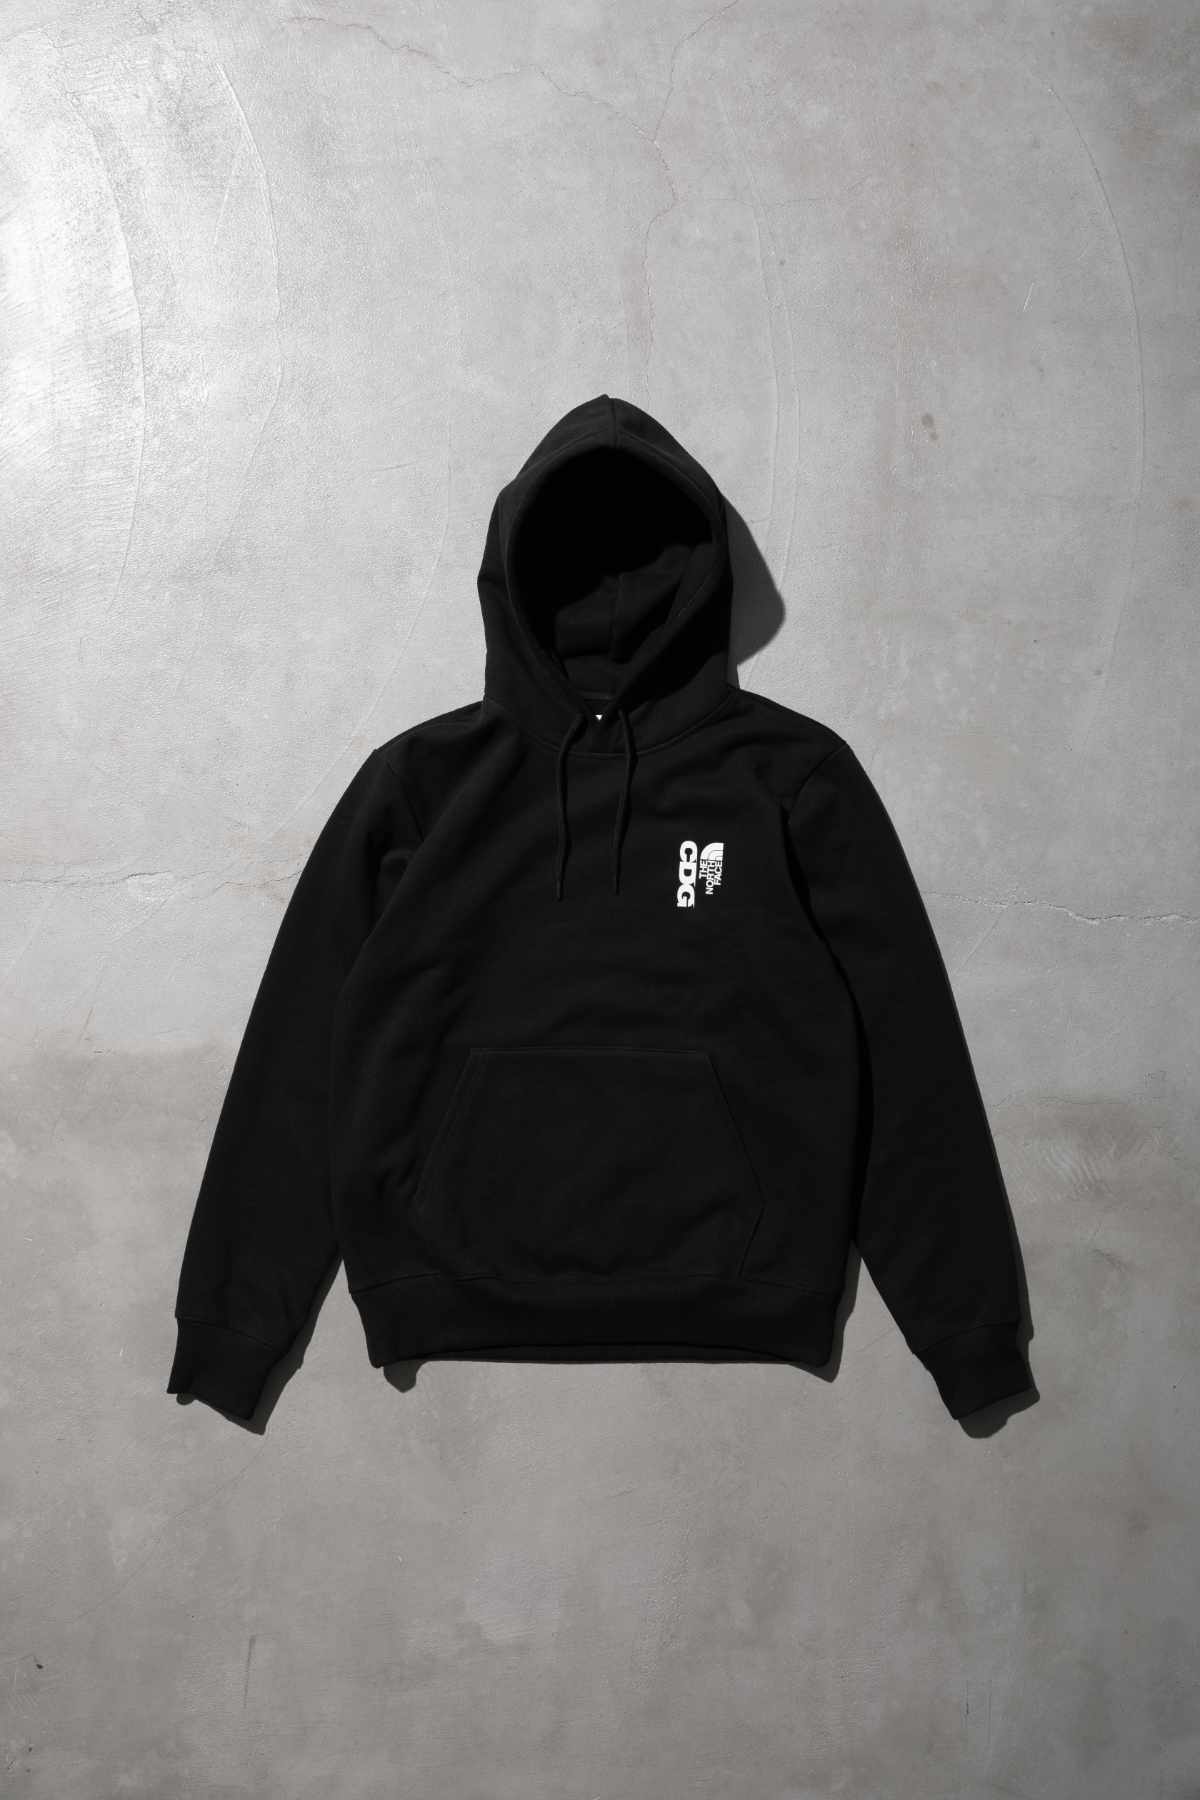 The CDG x TNF collab's black hoodie